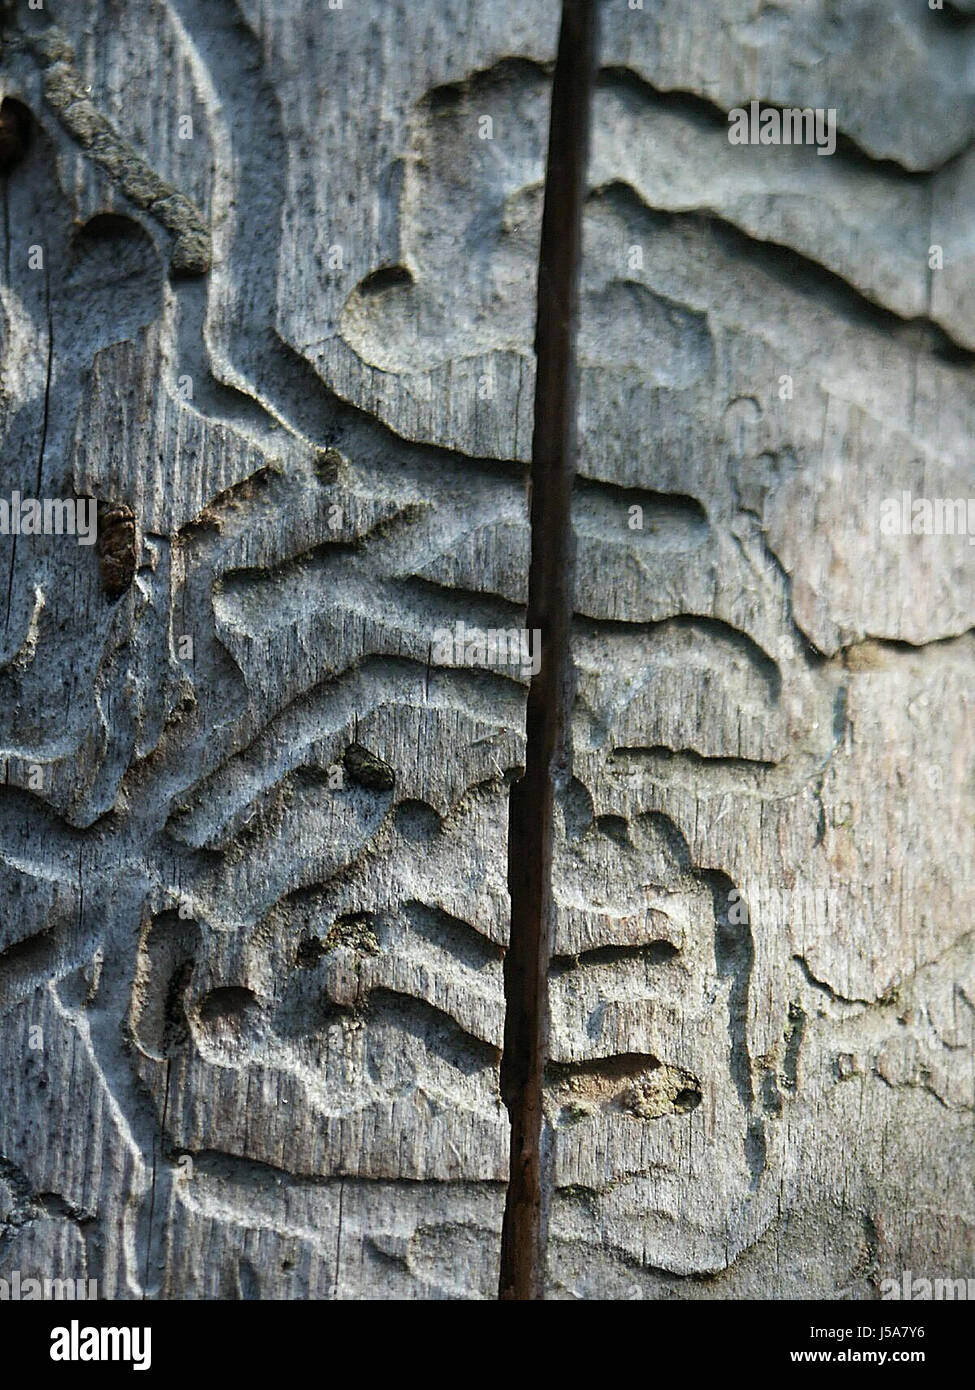 Detail Baum Bäume Insekten Stamm Sinn Rinde Pest Schädlinge Varmint Holz Wurm Stockfoto